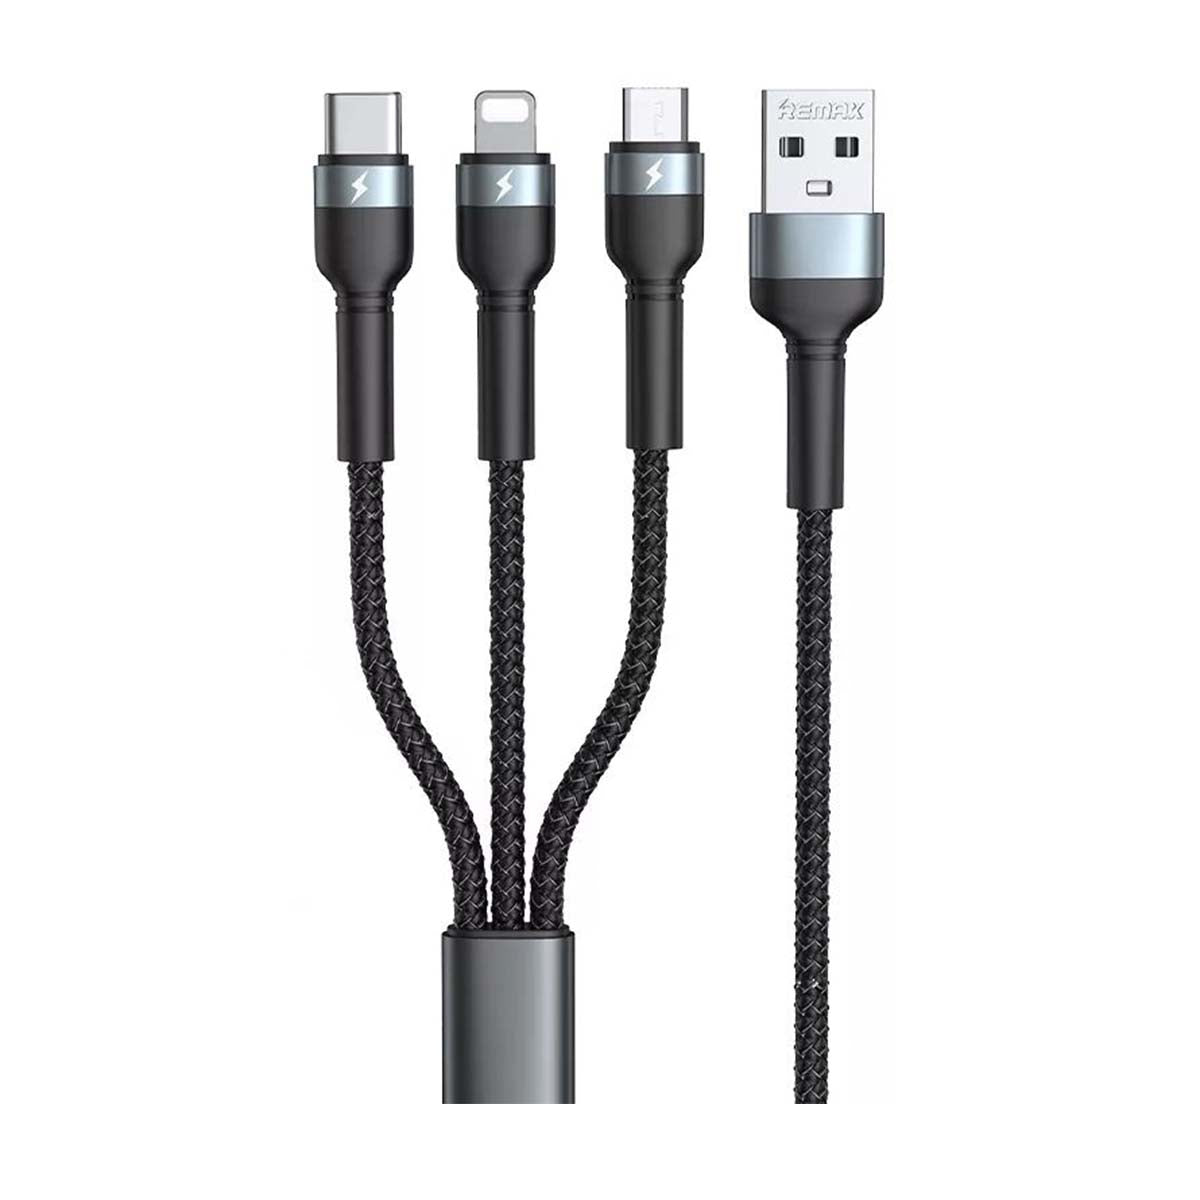 3-in-1 universele oplaadkabel, 3-in-1 USB naar Type-C+Micro USB+ Lightning-oplaadkabel